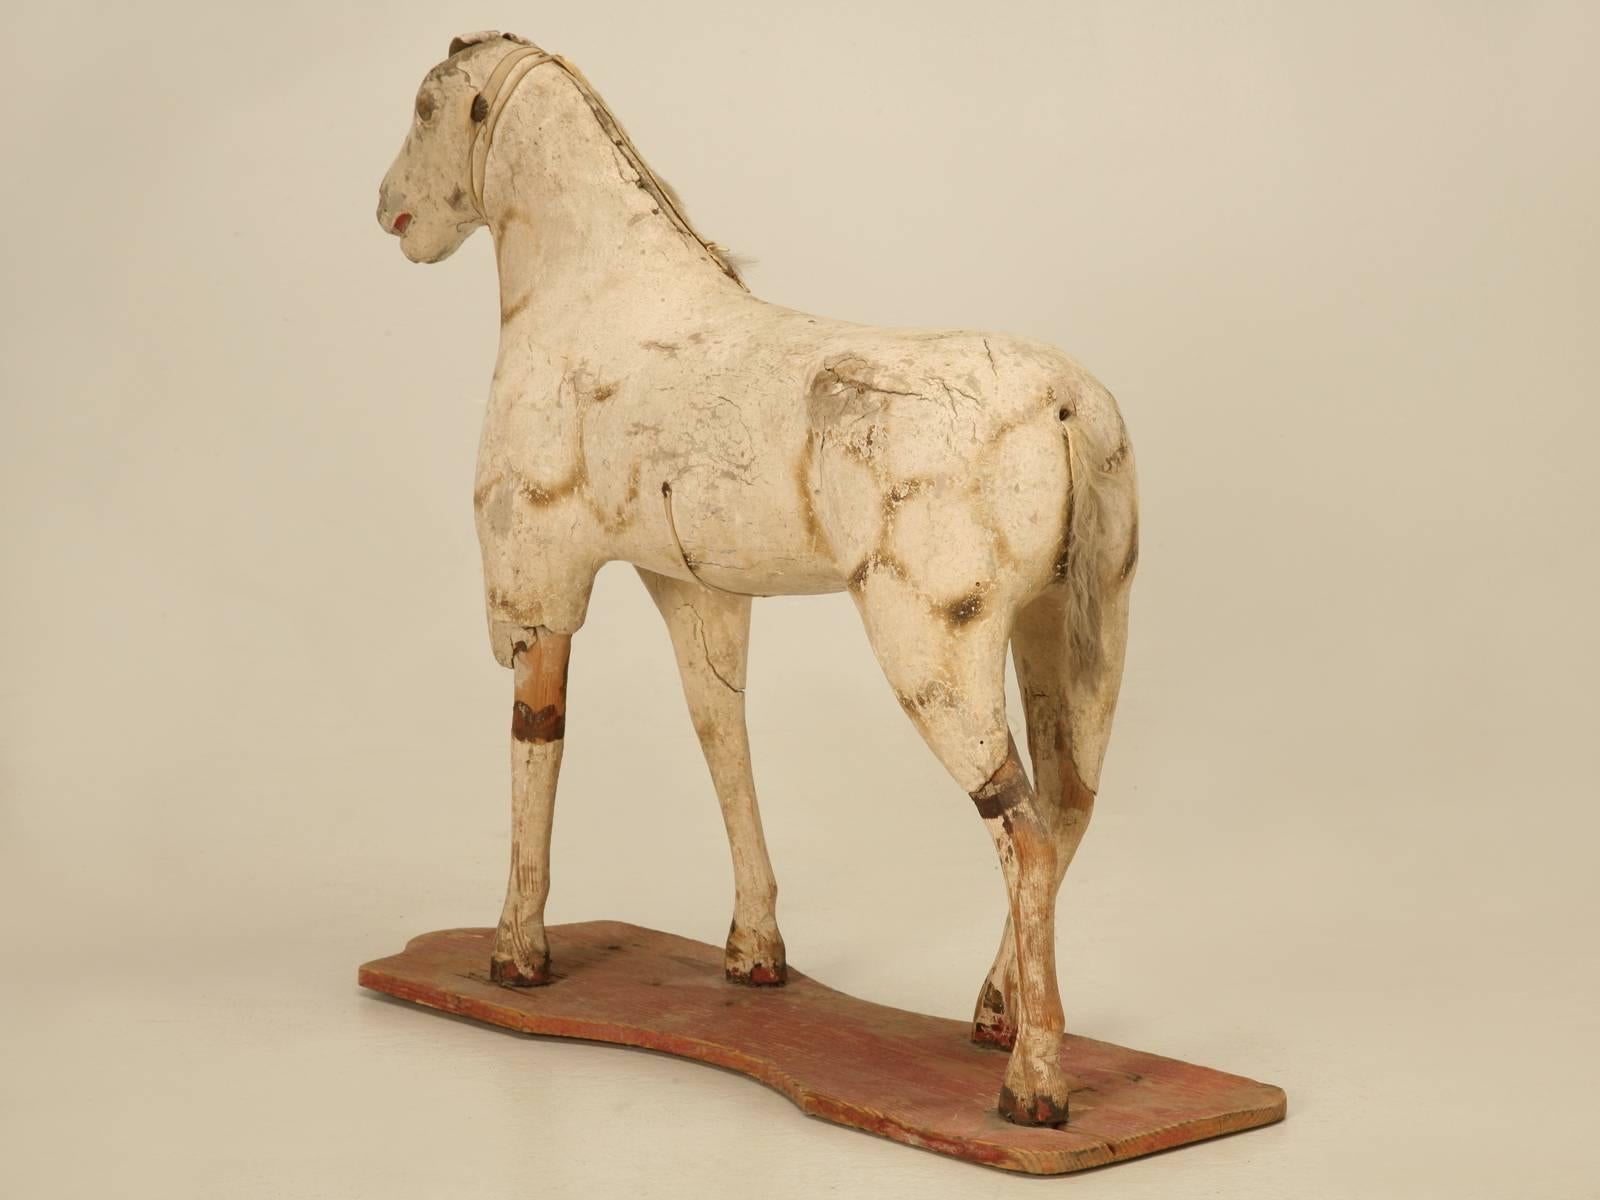 Hand-Crafted Antique Child's Papier Mâché Over Wood Horse Circa 1900's Original Condition